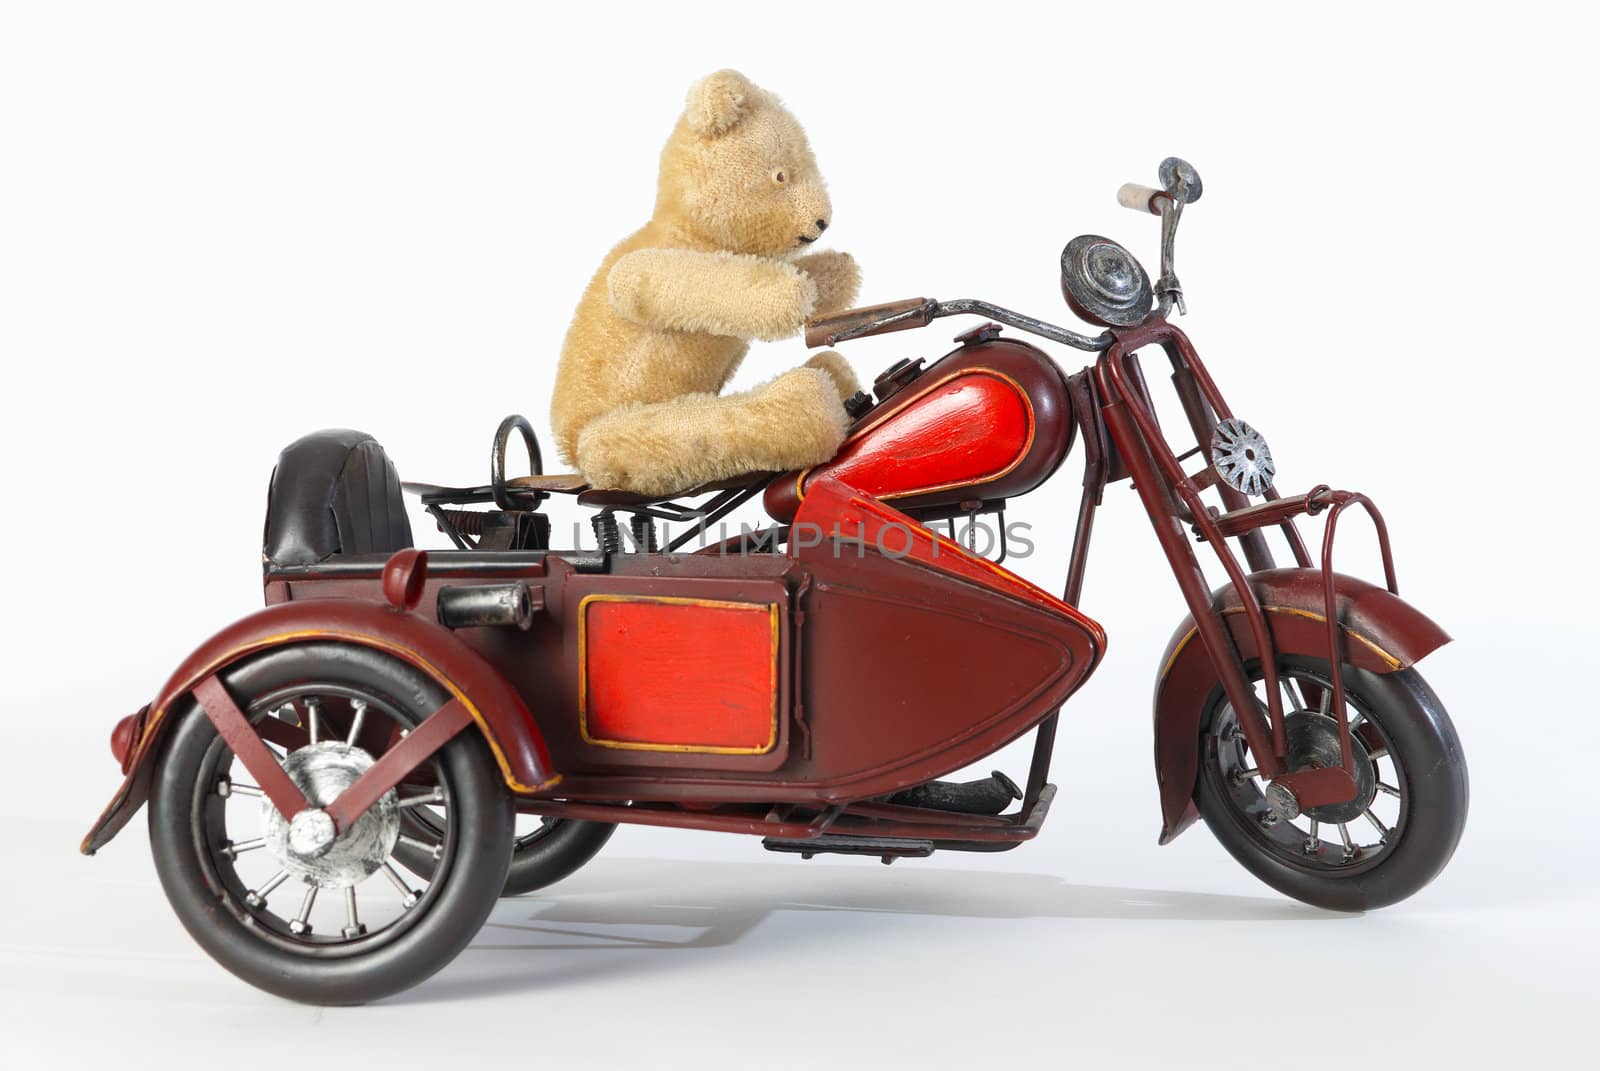 Teddy riding a motorbike toy